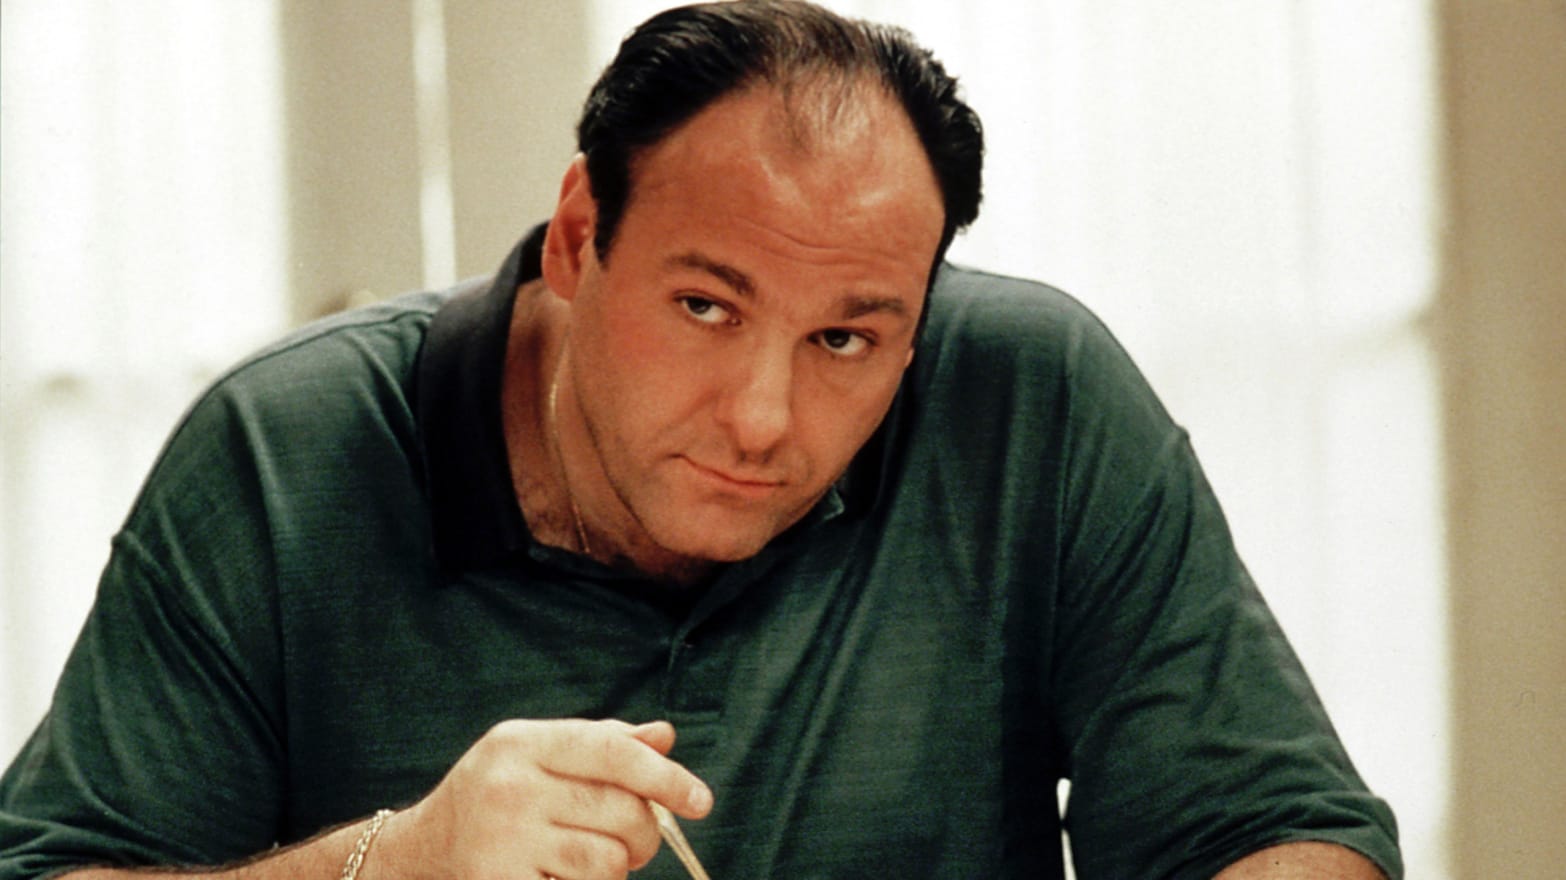 R.I.P. James Gandolfini: 8 Wild Stories About the Making of 'The Sopranos